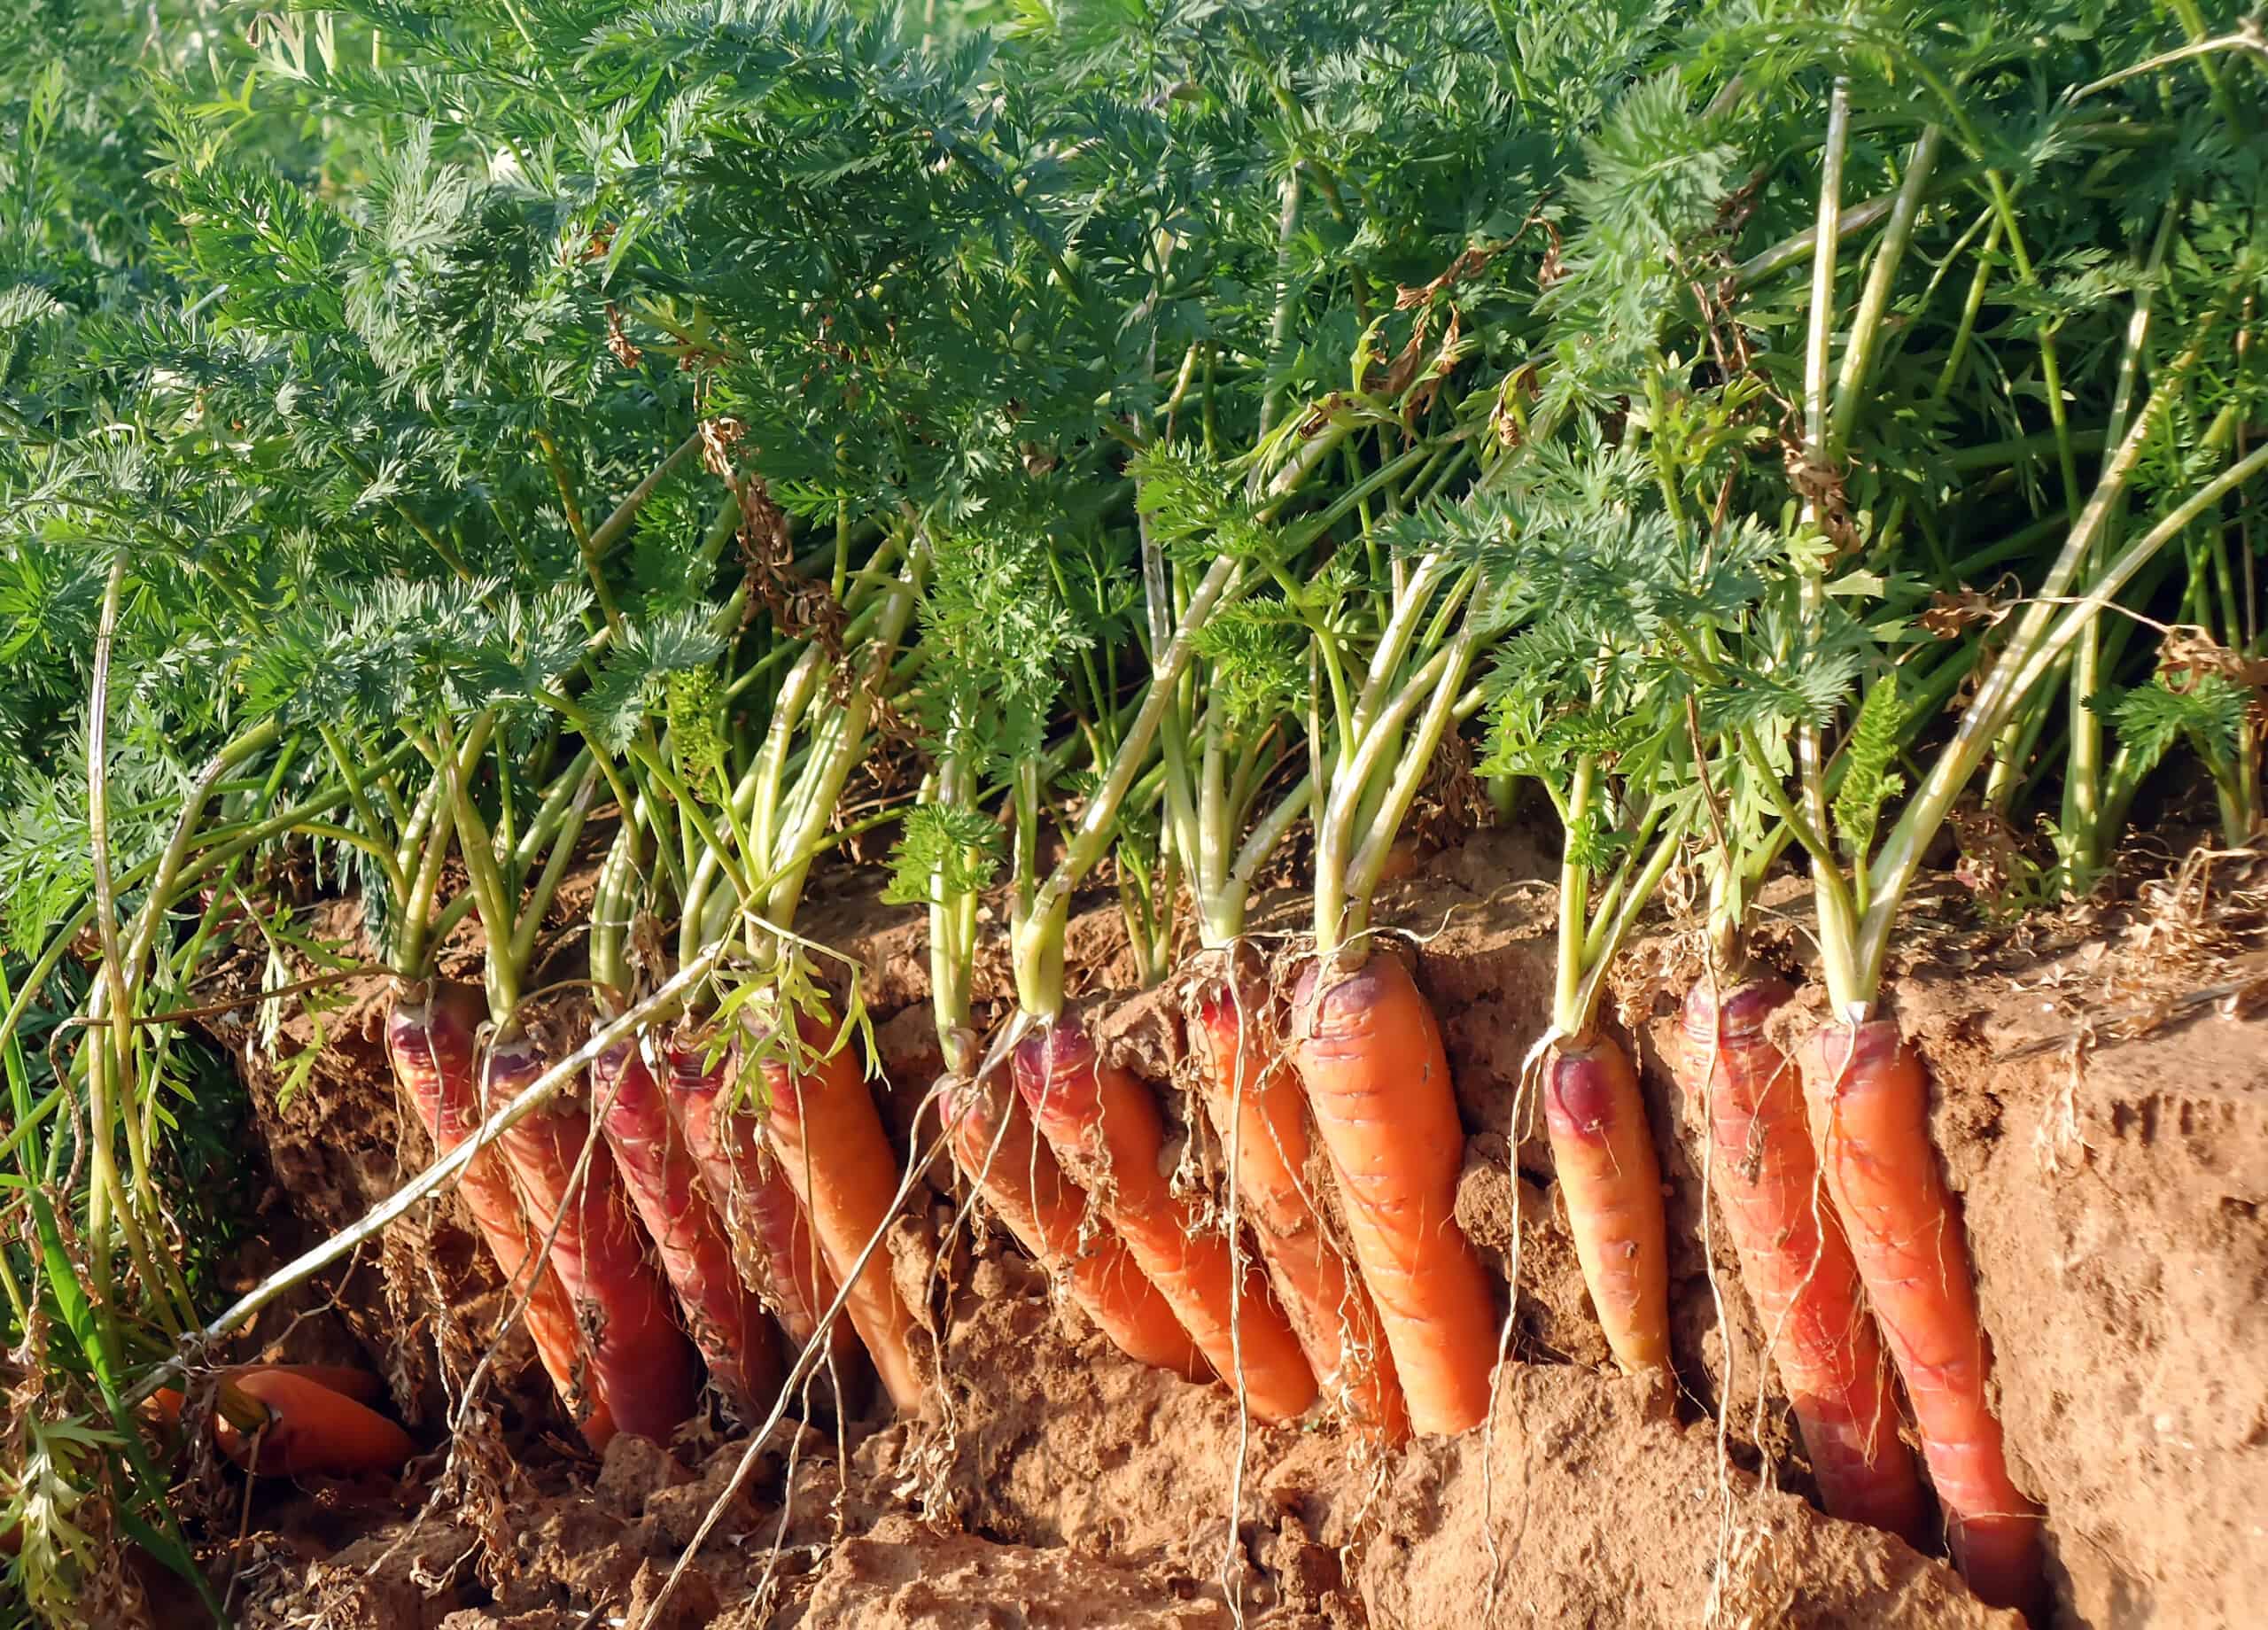 Carrots ready for harvest